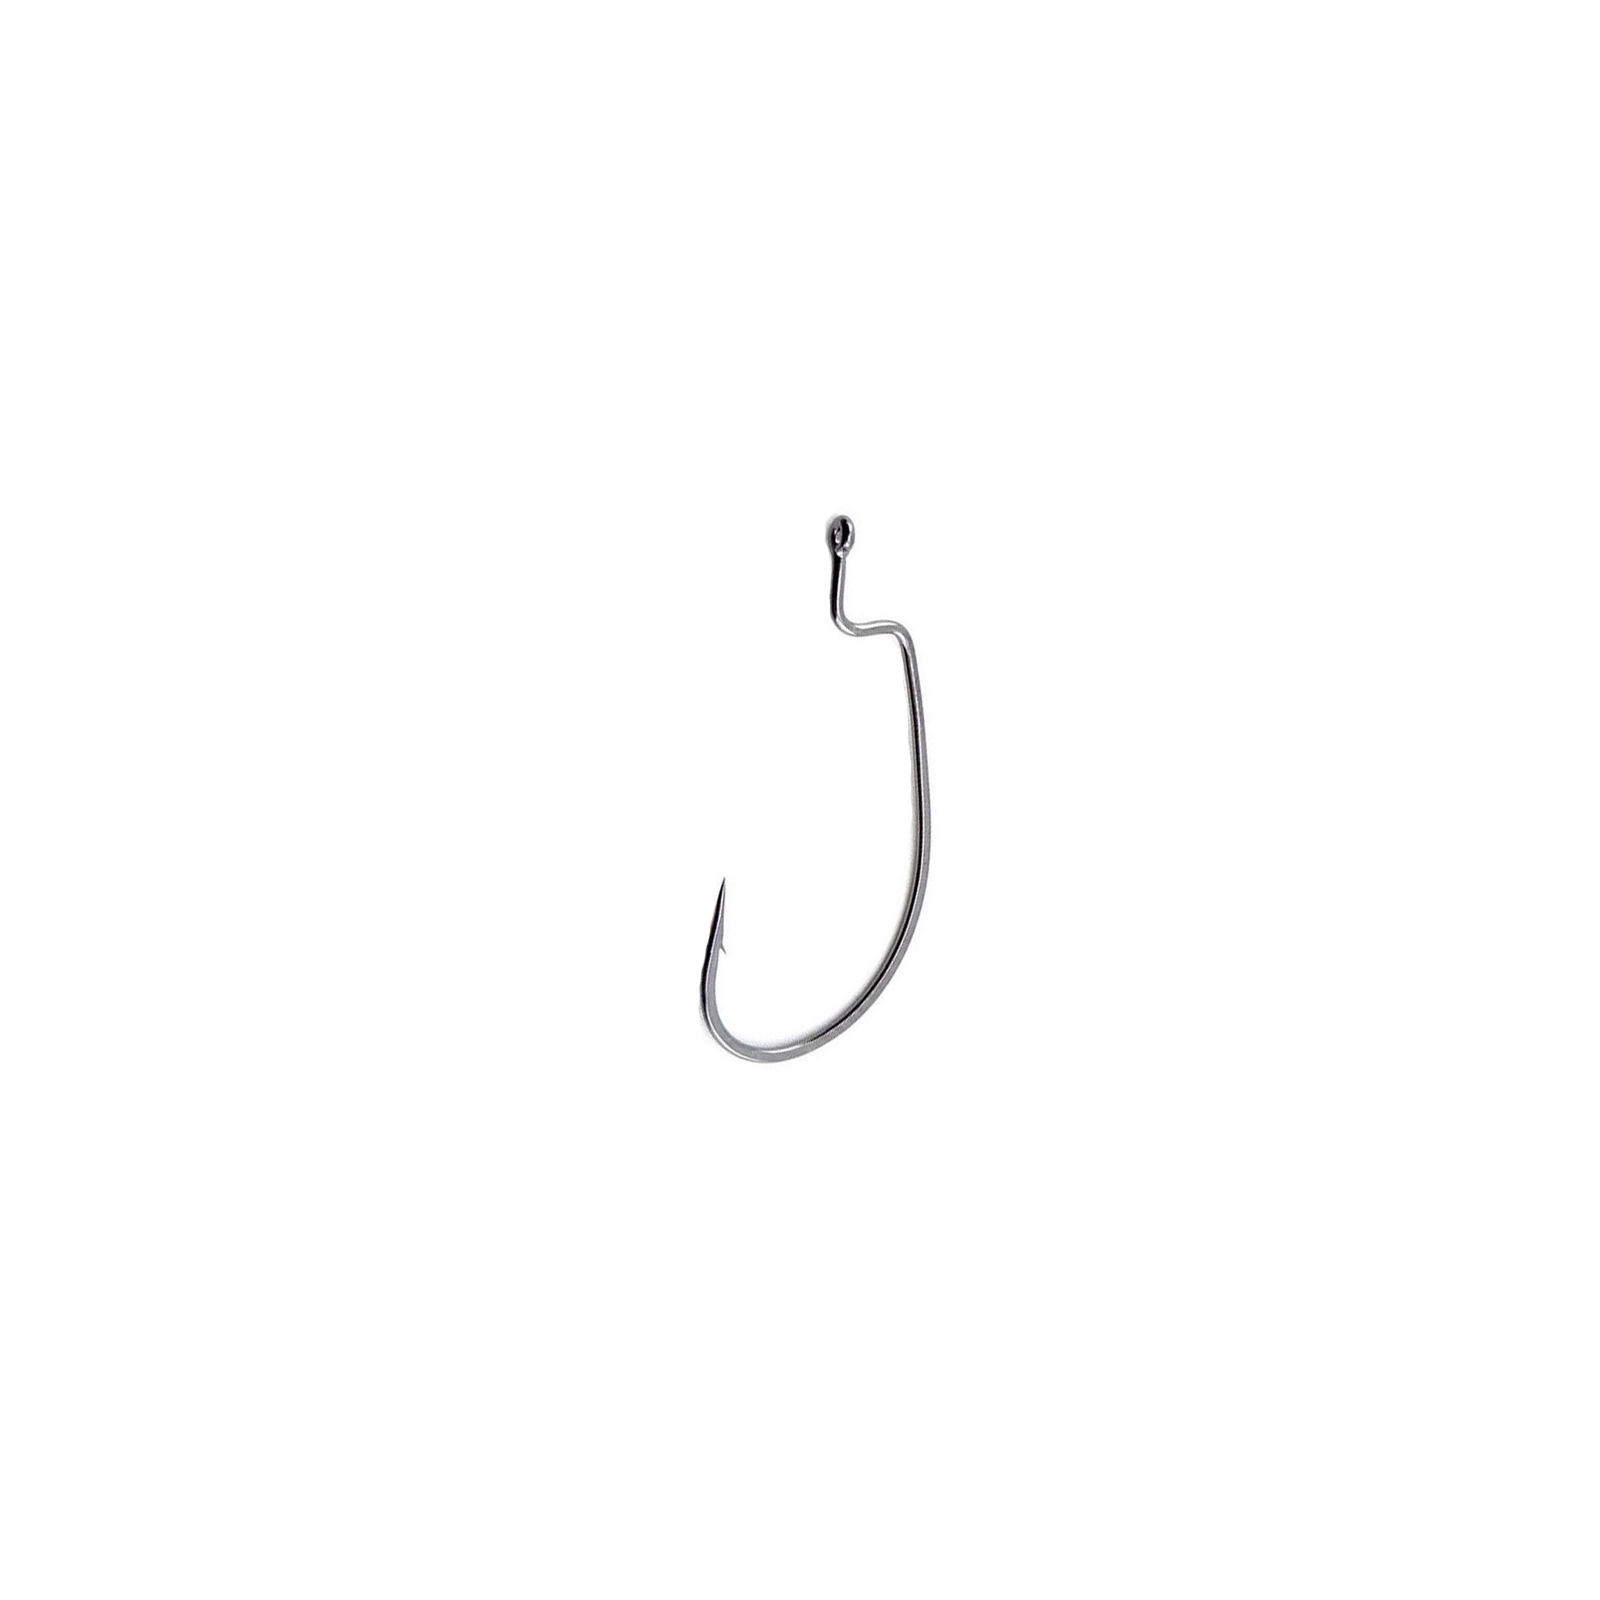 Крючок Decoy Worm 19 S.S. Hook 8, 10 шт (1562.02.59)